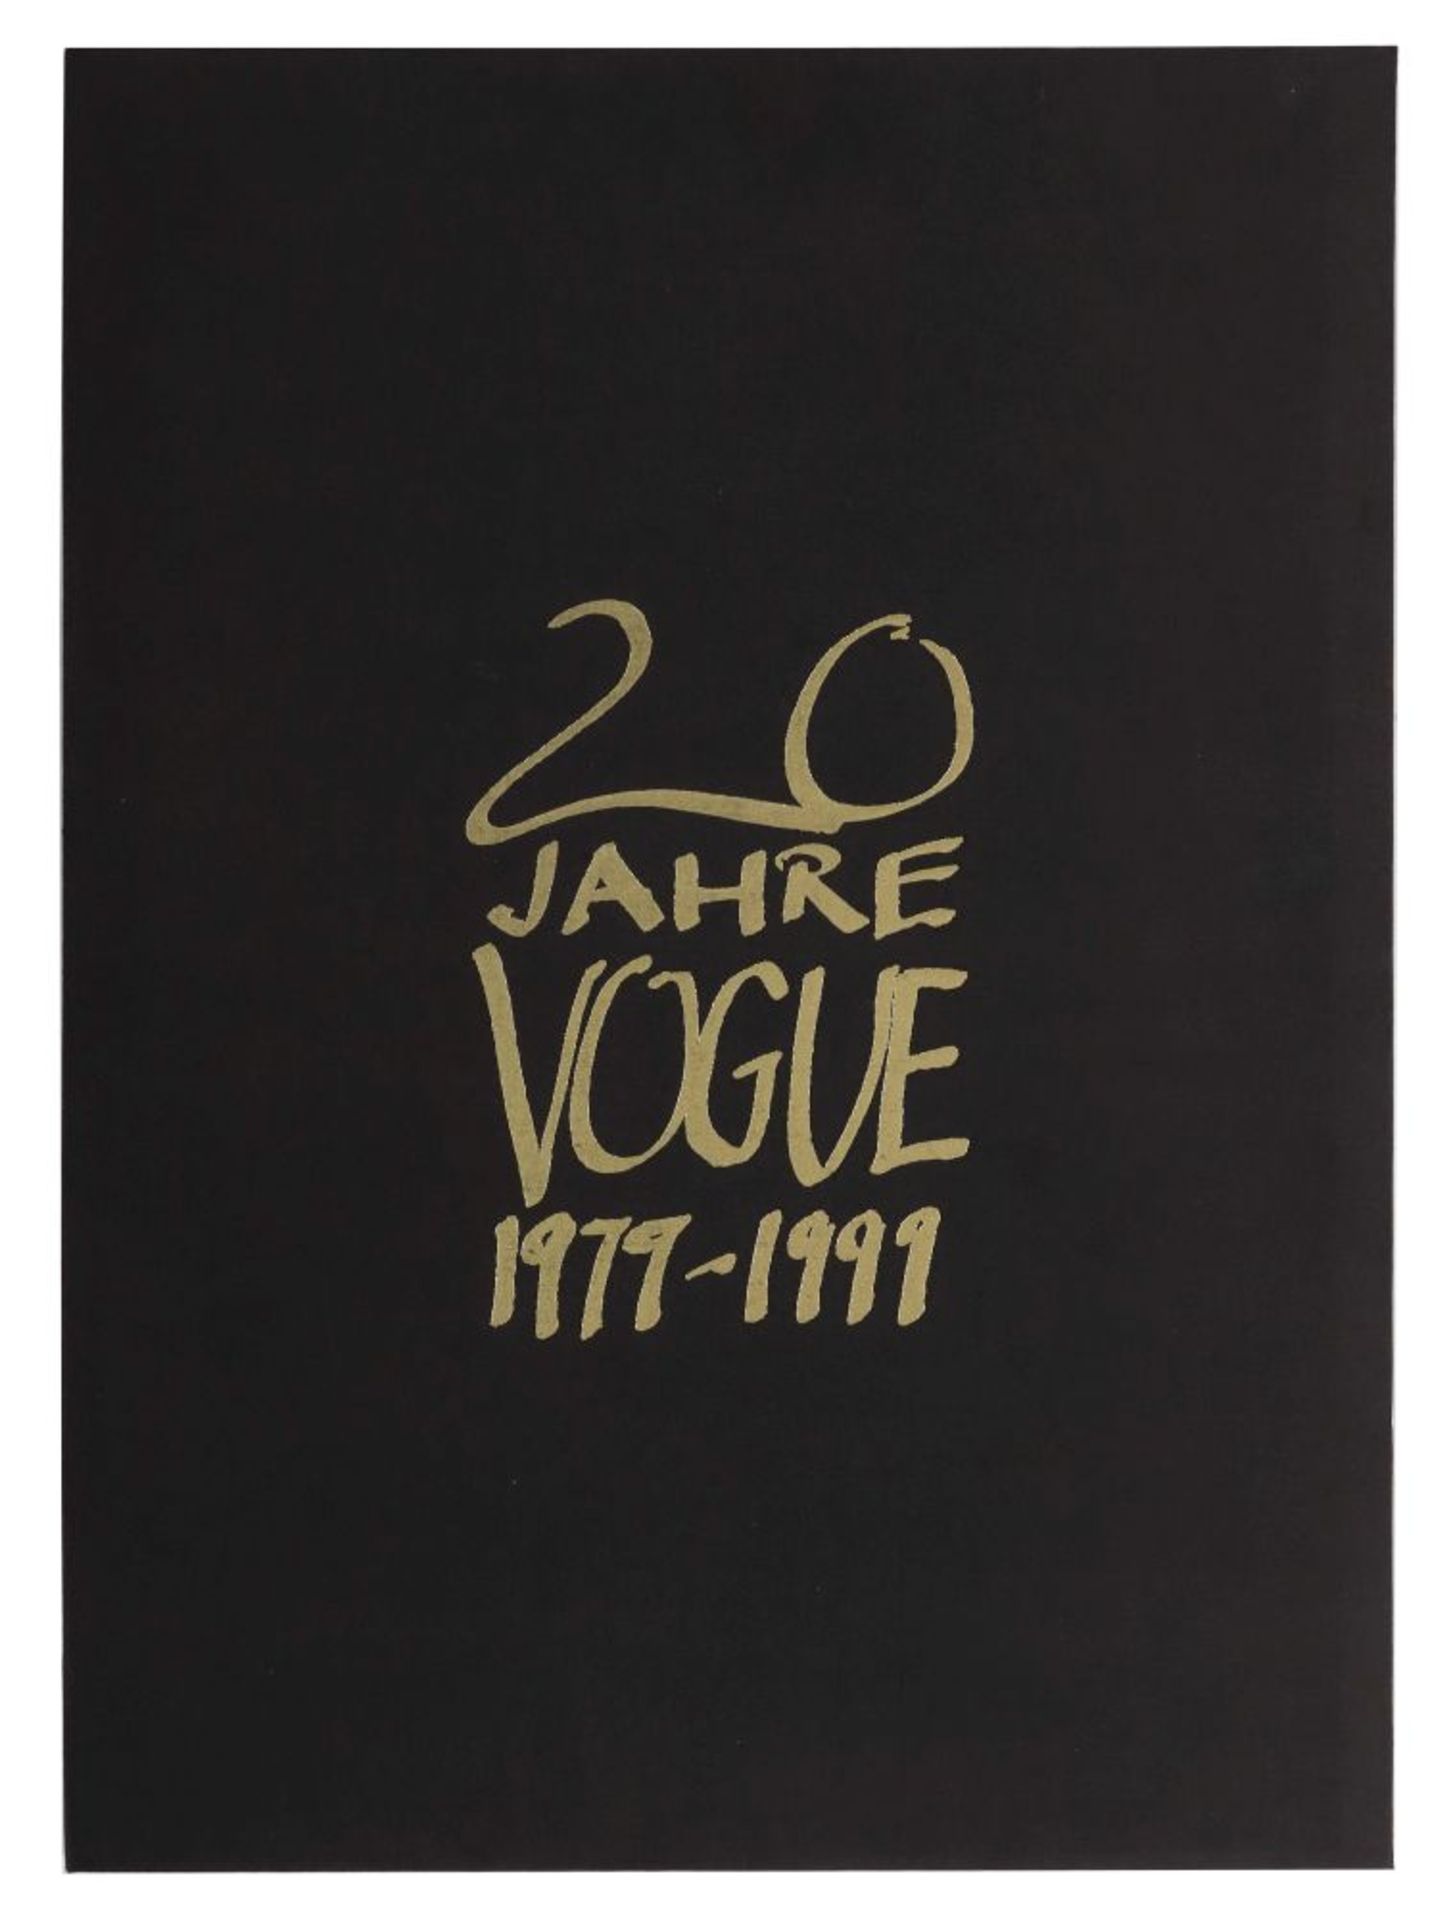 20 Jahre Vogue 1979-1999 - Image 2 of 7